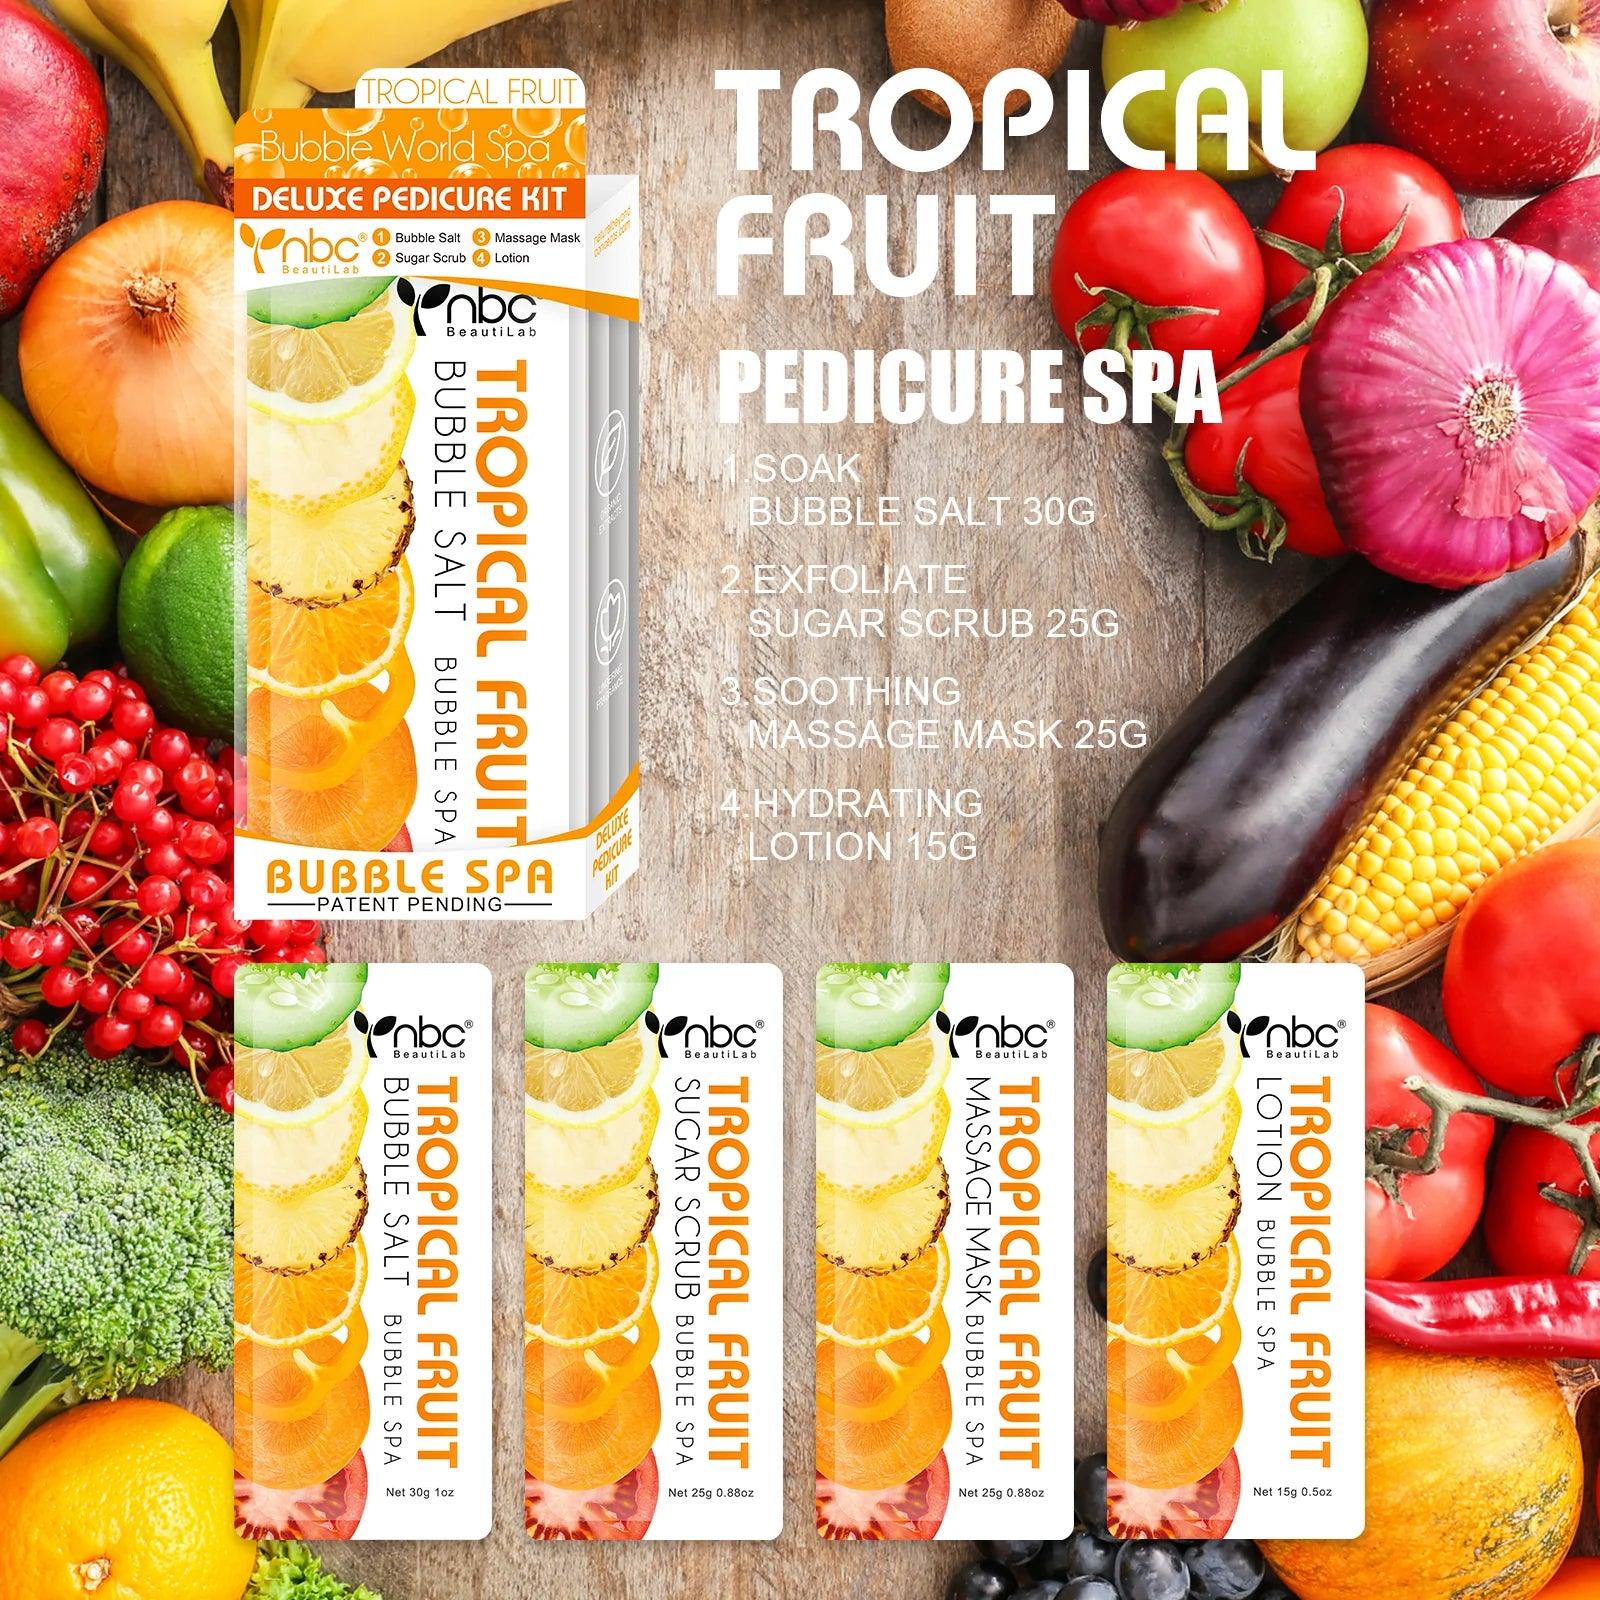 nbc Bubble Spa Pedicure 4 Step Kit - Tropical Fruit (Pack of 50 Kits)